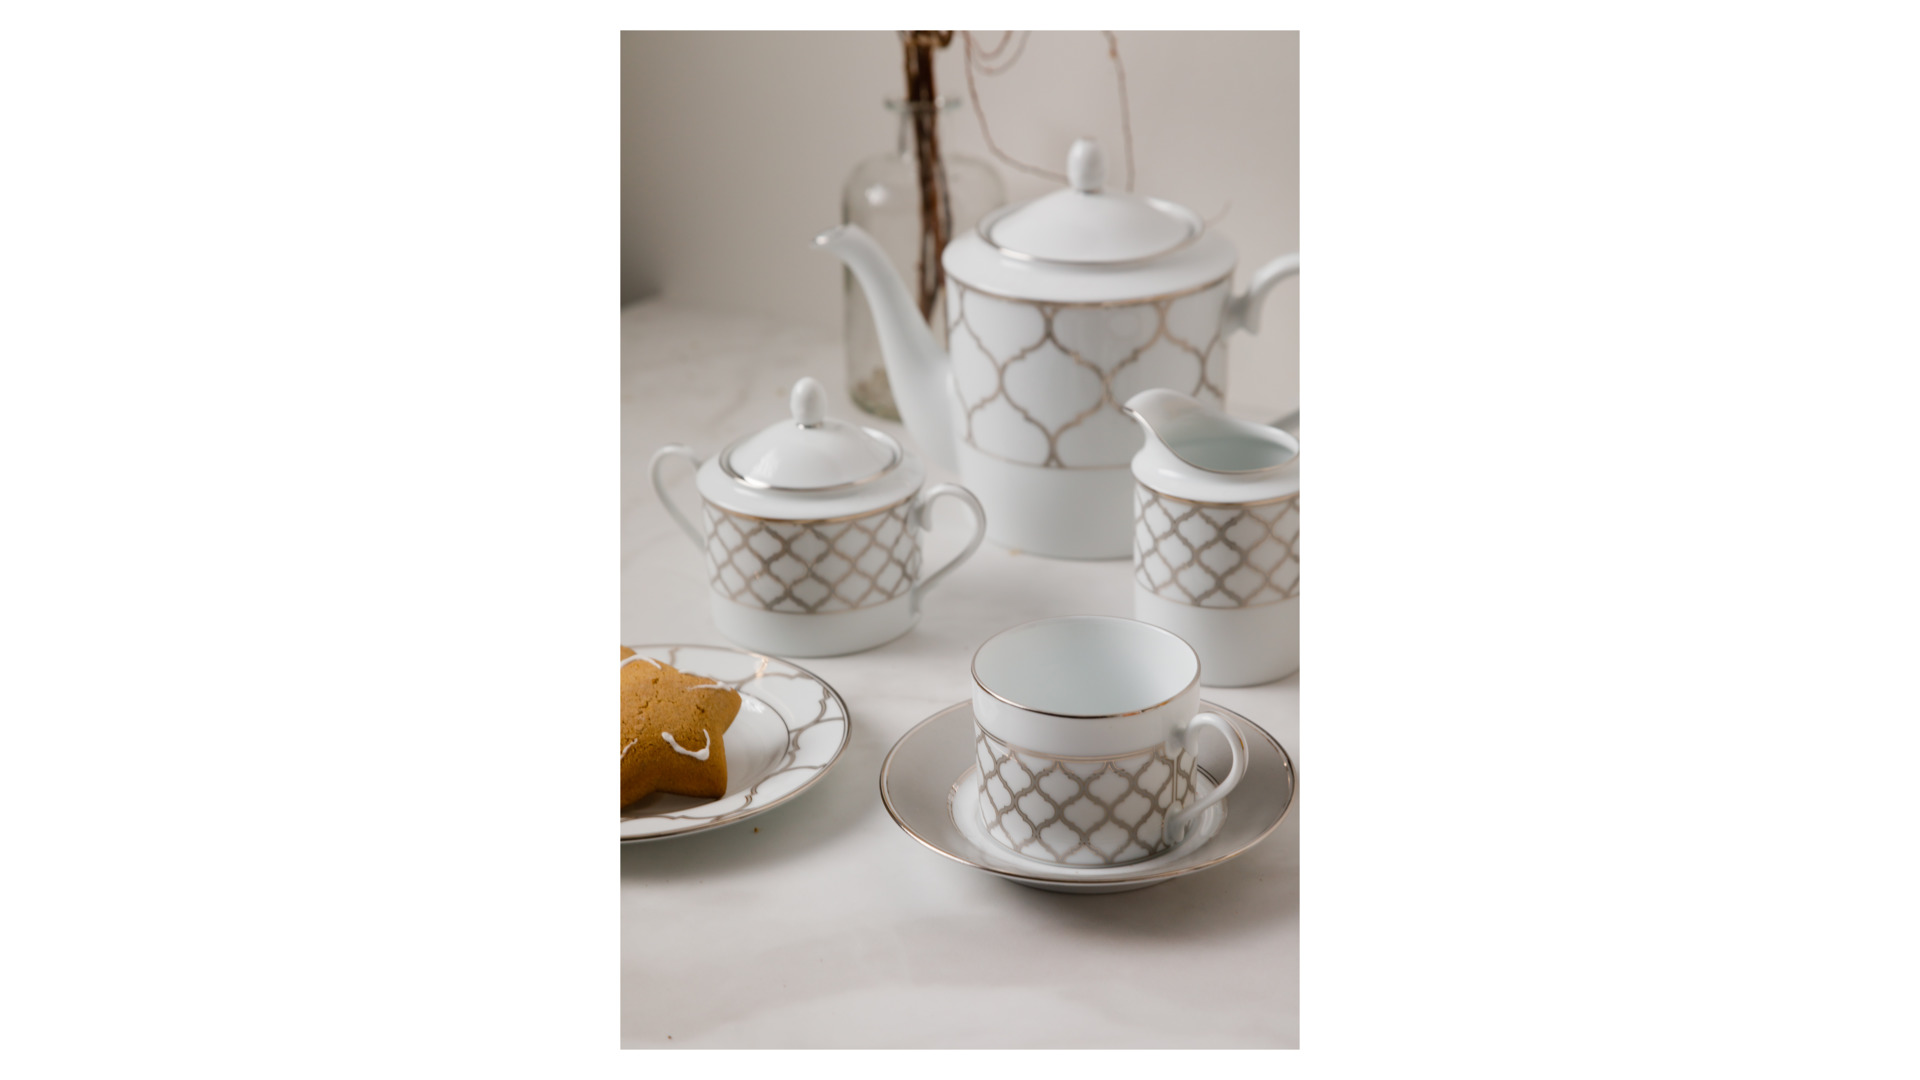 Блюдце для чашки чайной Noritake Царский дворец, платиновый кант 15 см, фарфор